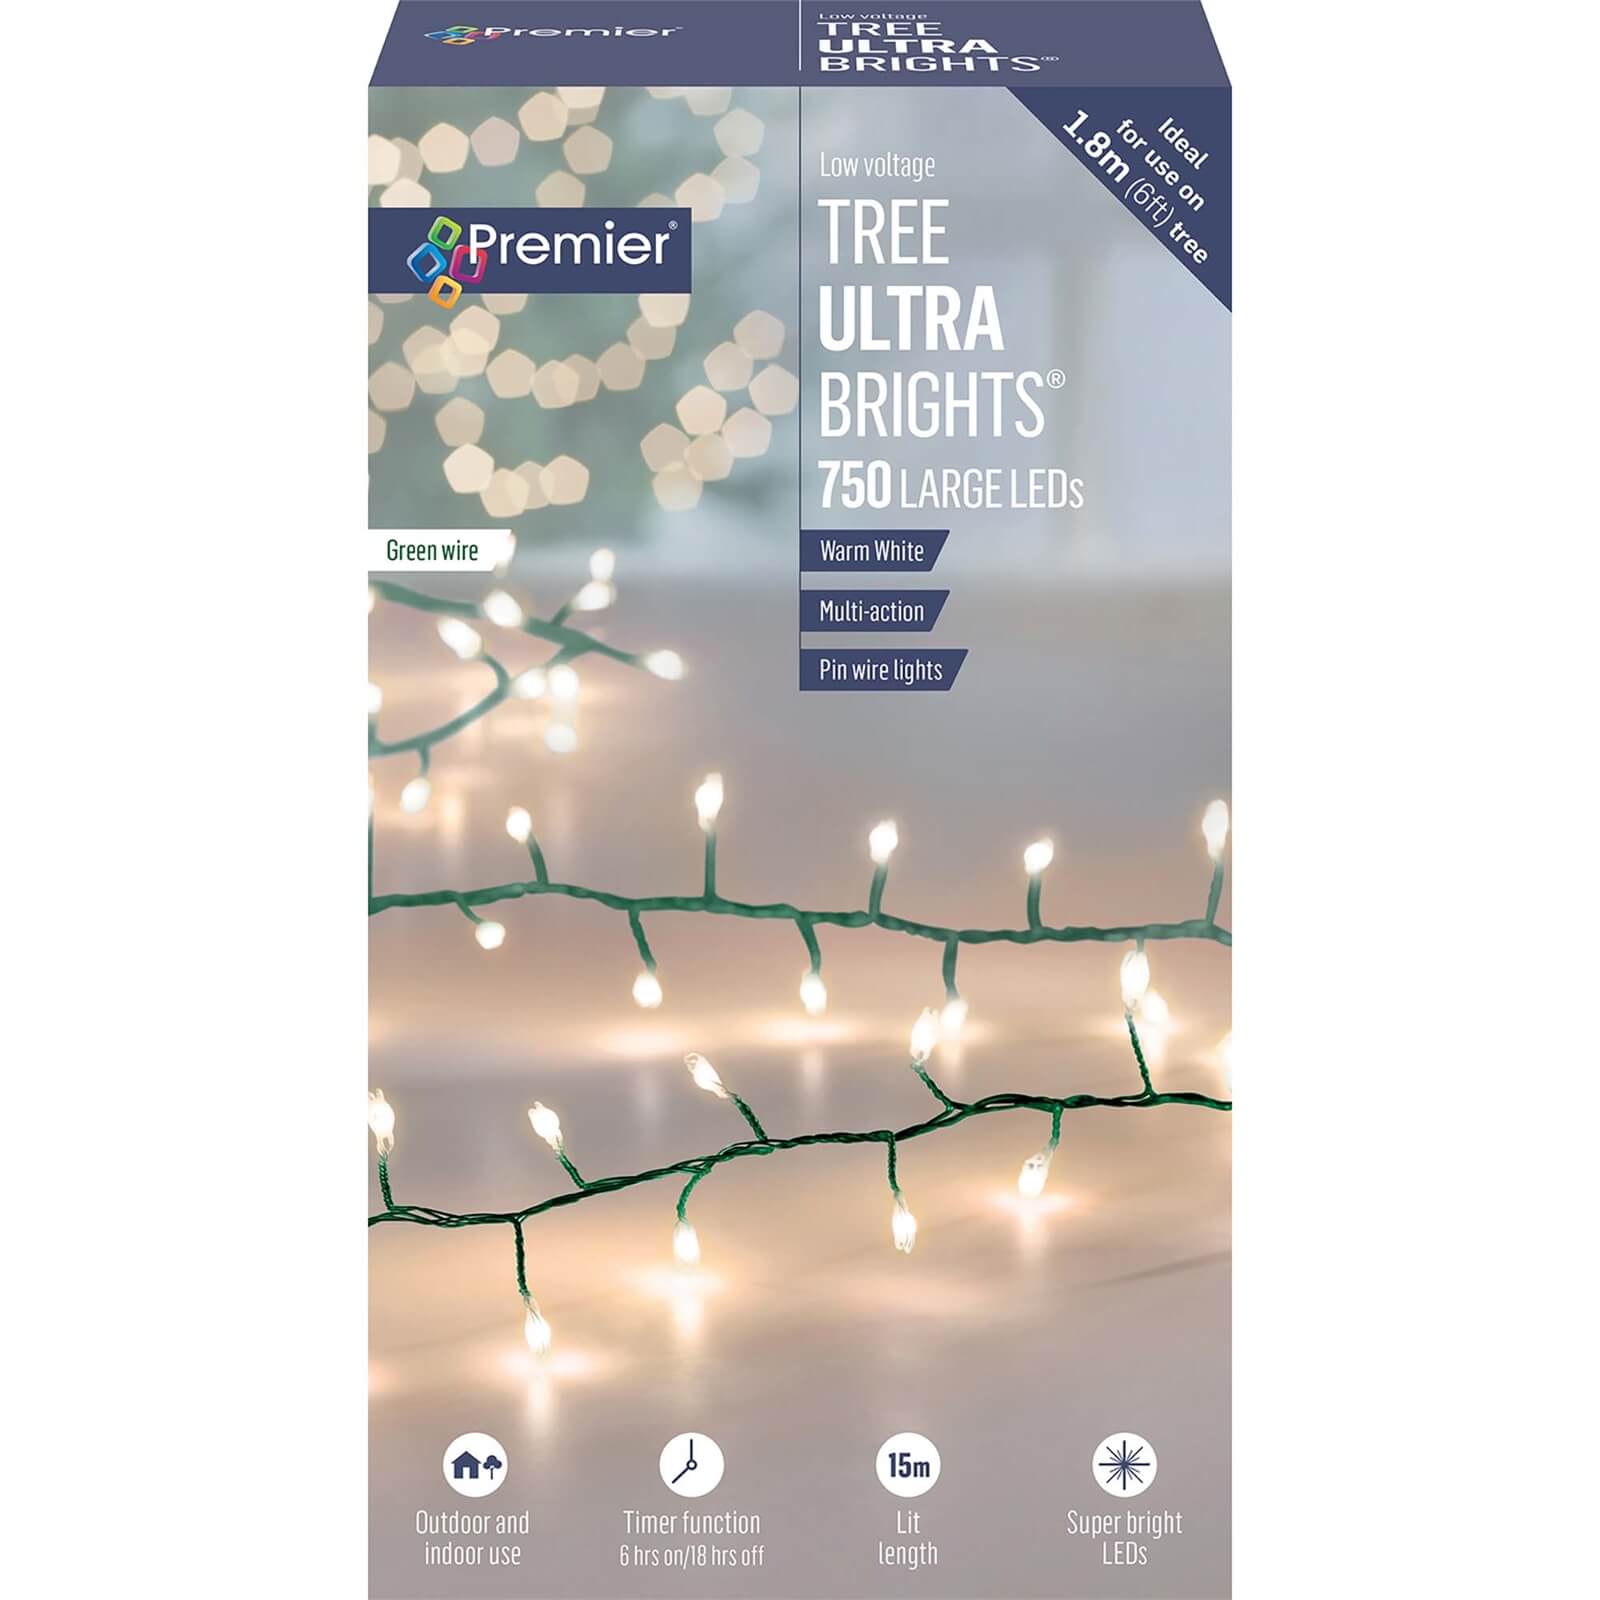 750 Warm White Multiaction Ultrabright TreeBright LED Lights